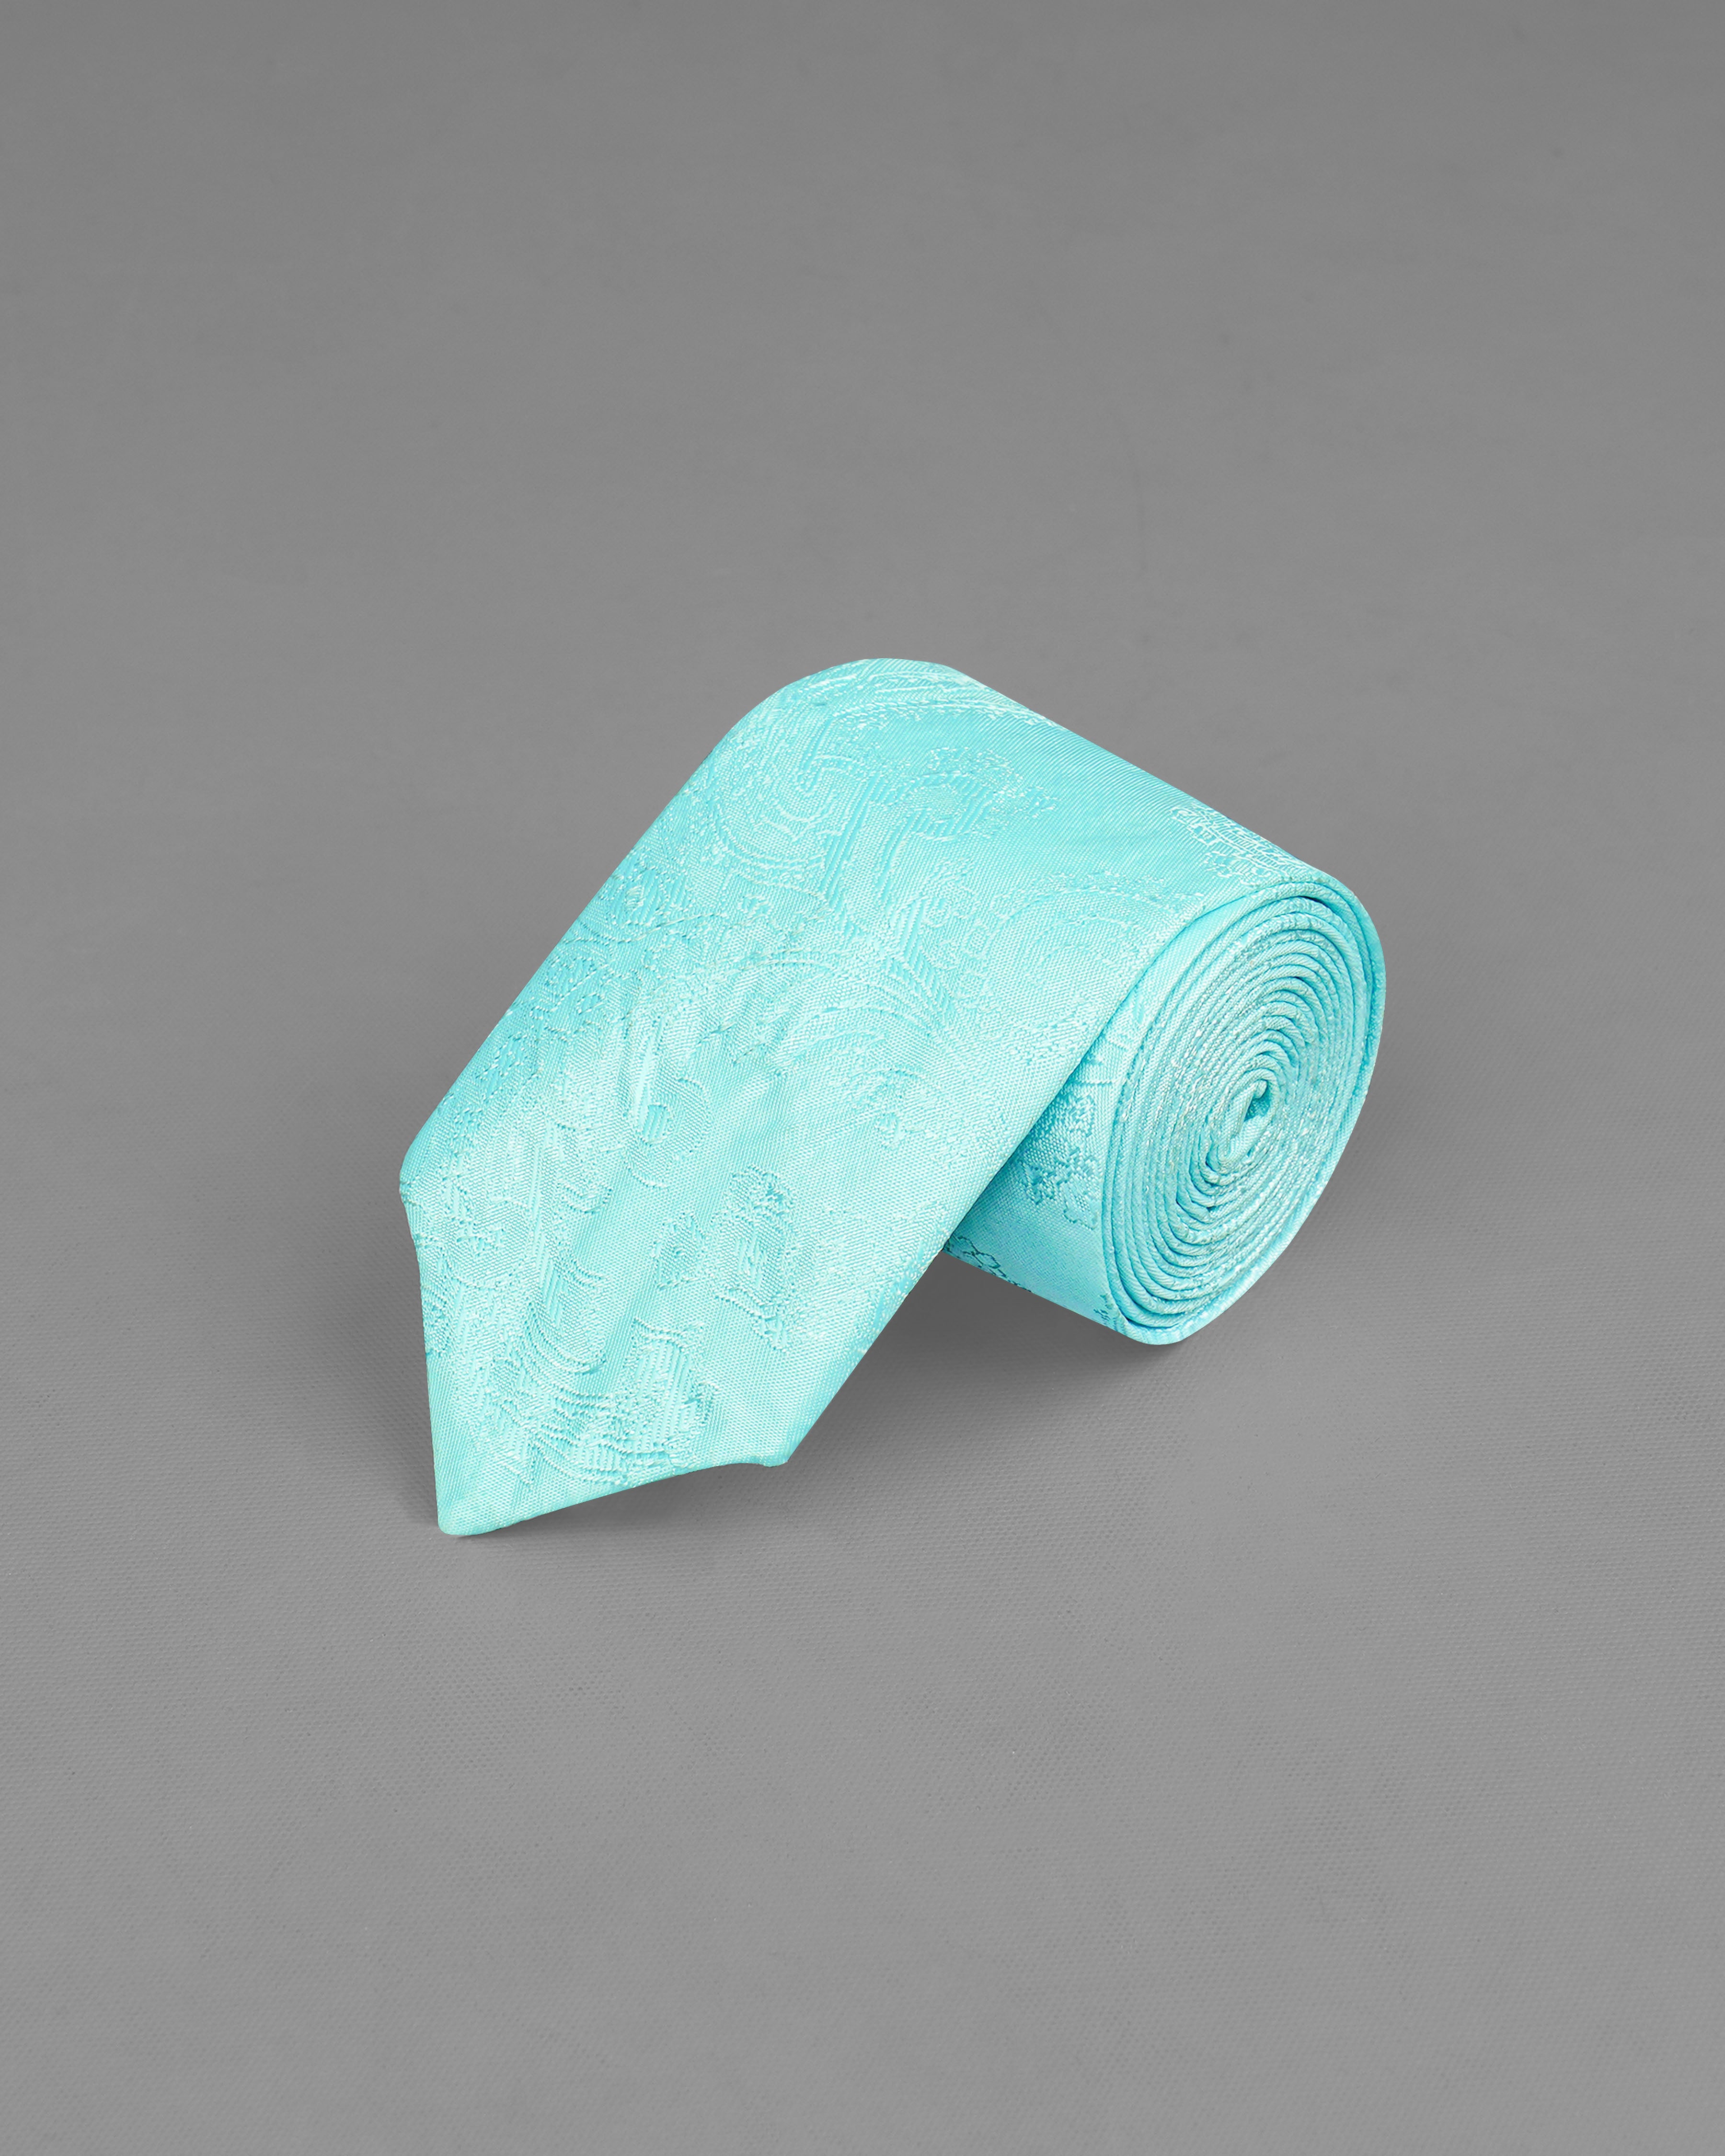 Riptide Aqua Blue Paisley Jacquard Tie with Pocket Square TP034